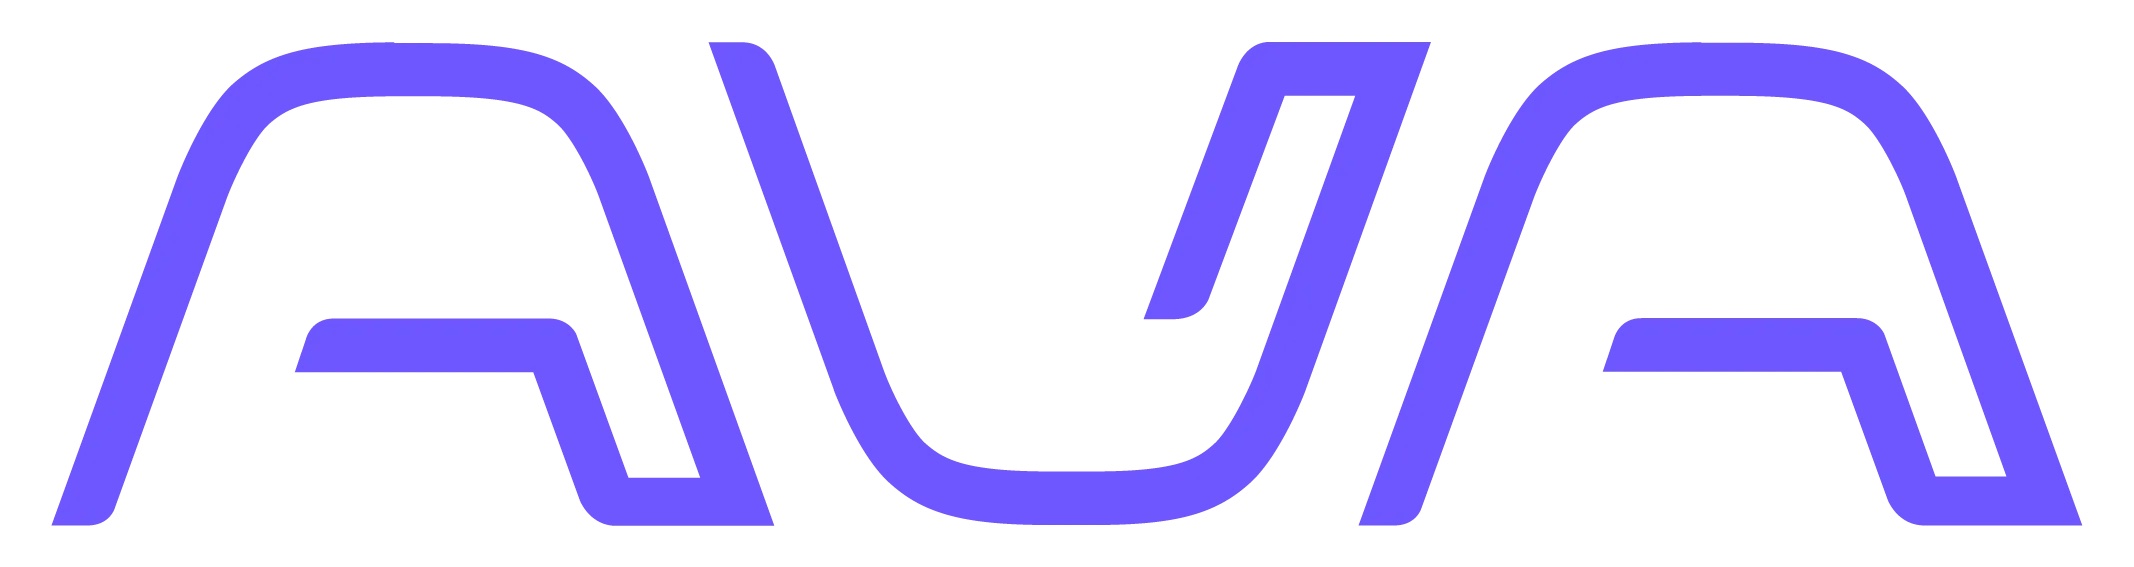 Ava Security logo